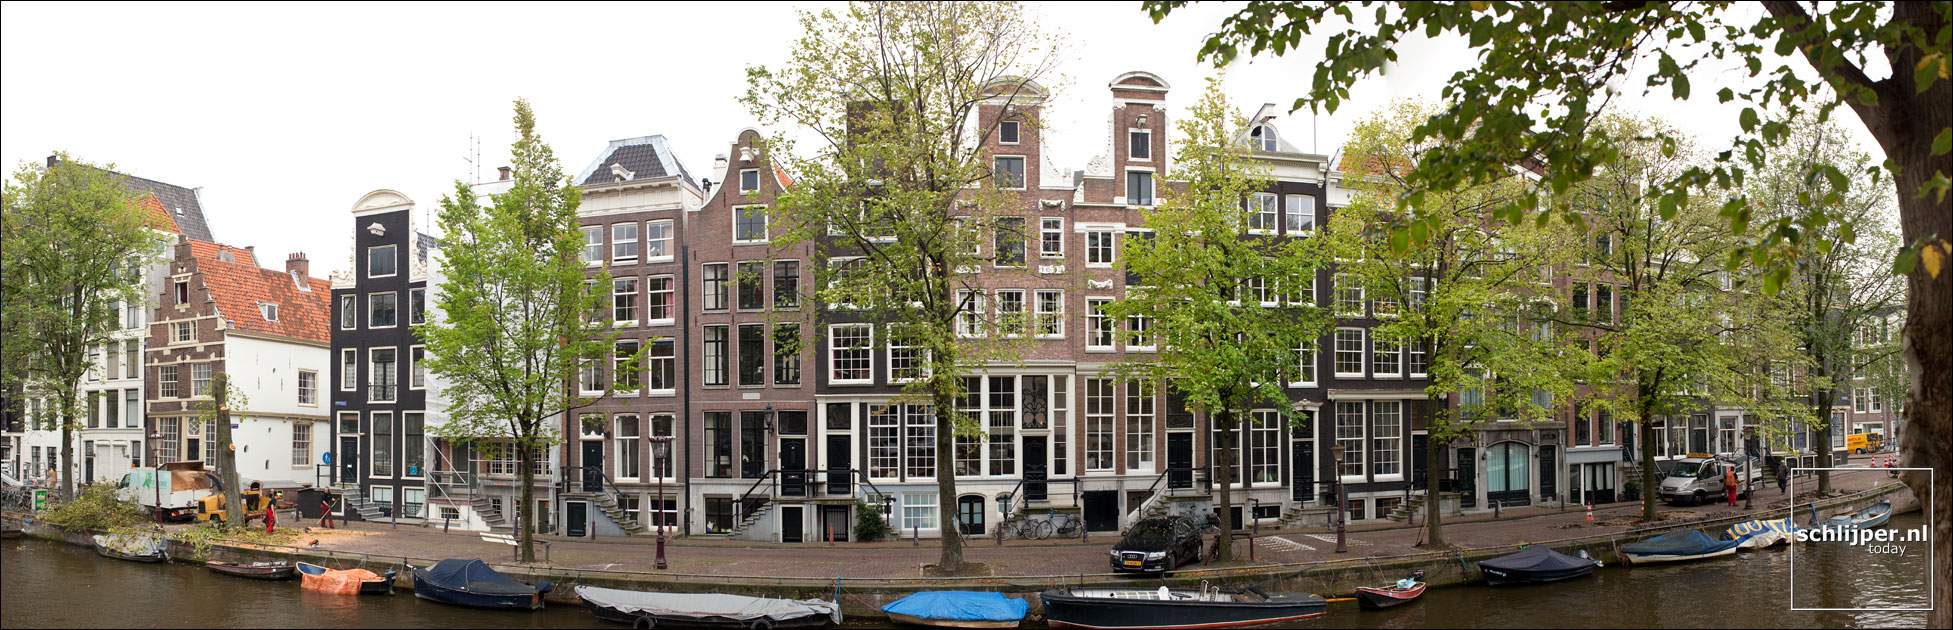 Nederland, Amsterdam, 5 oktober 2011